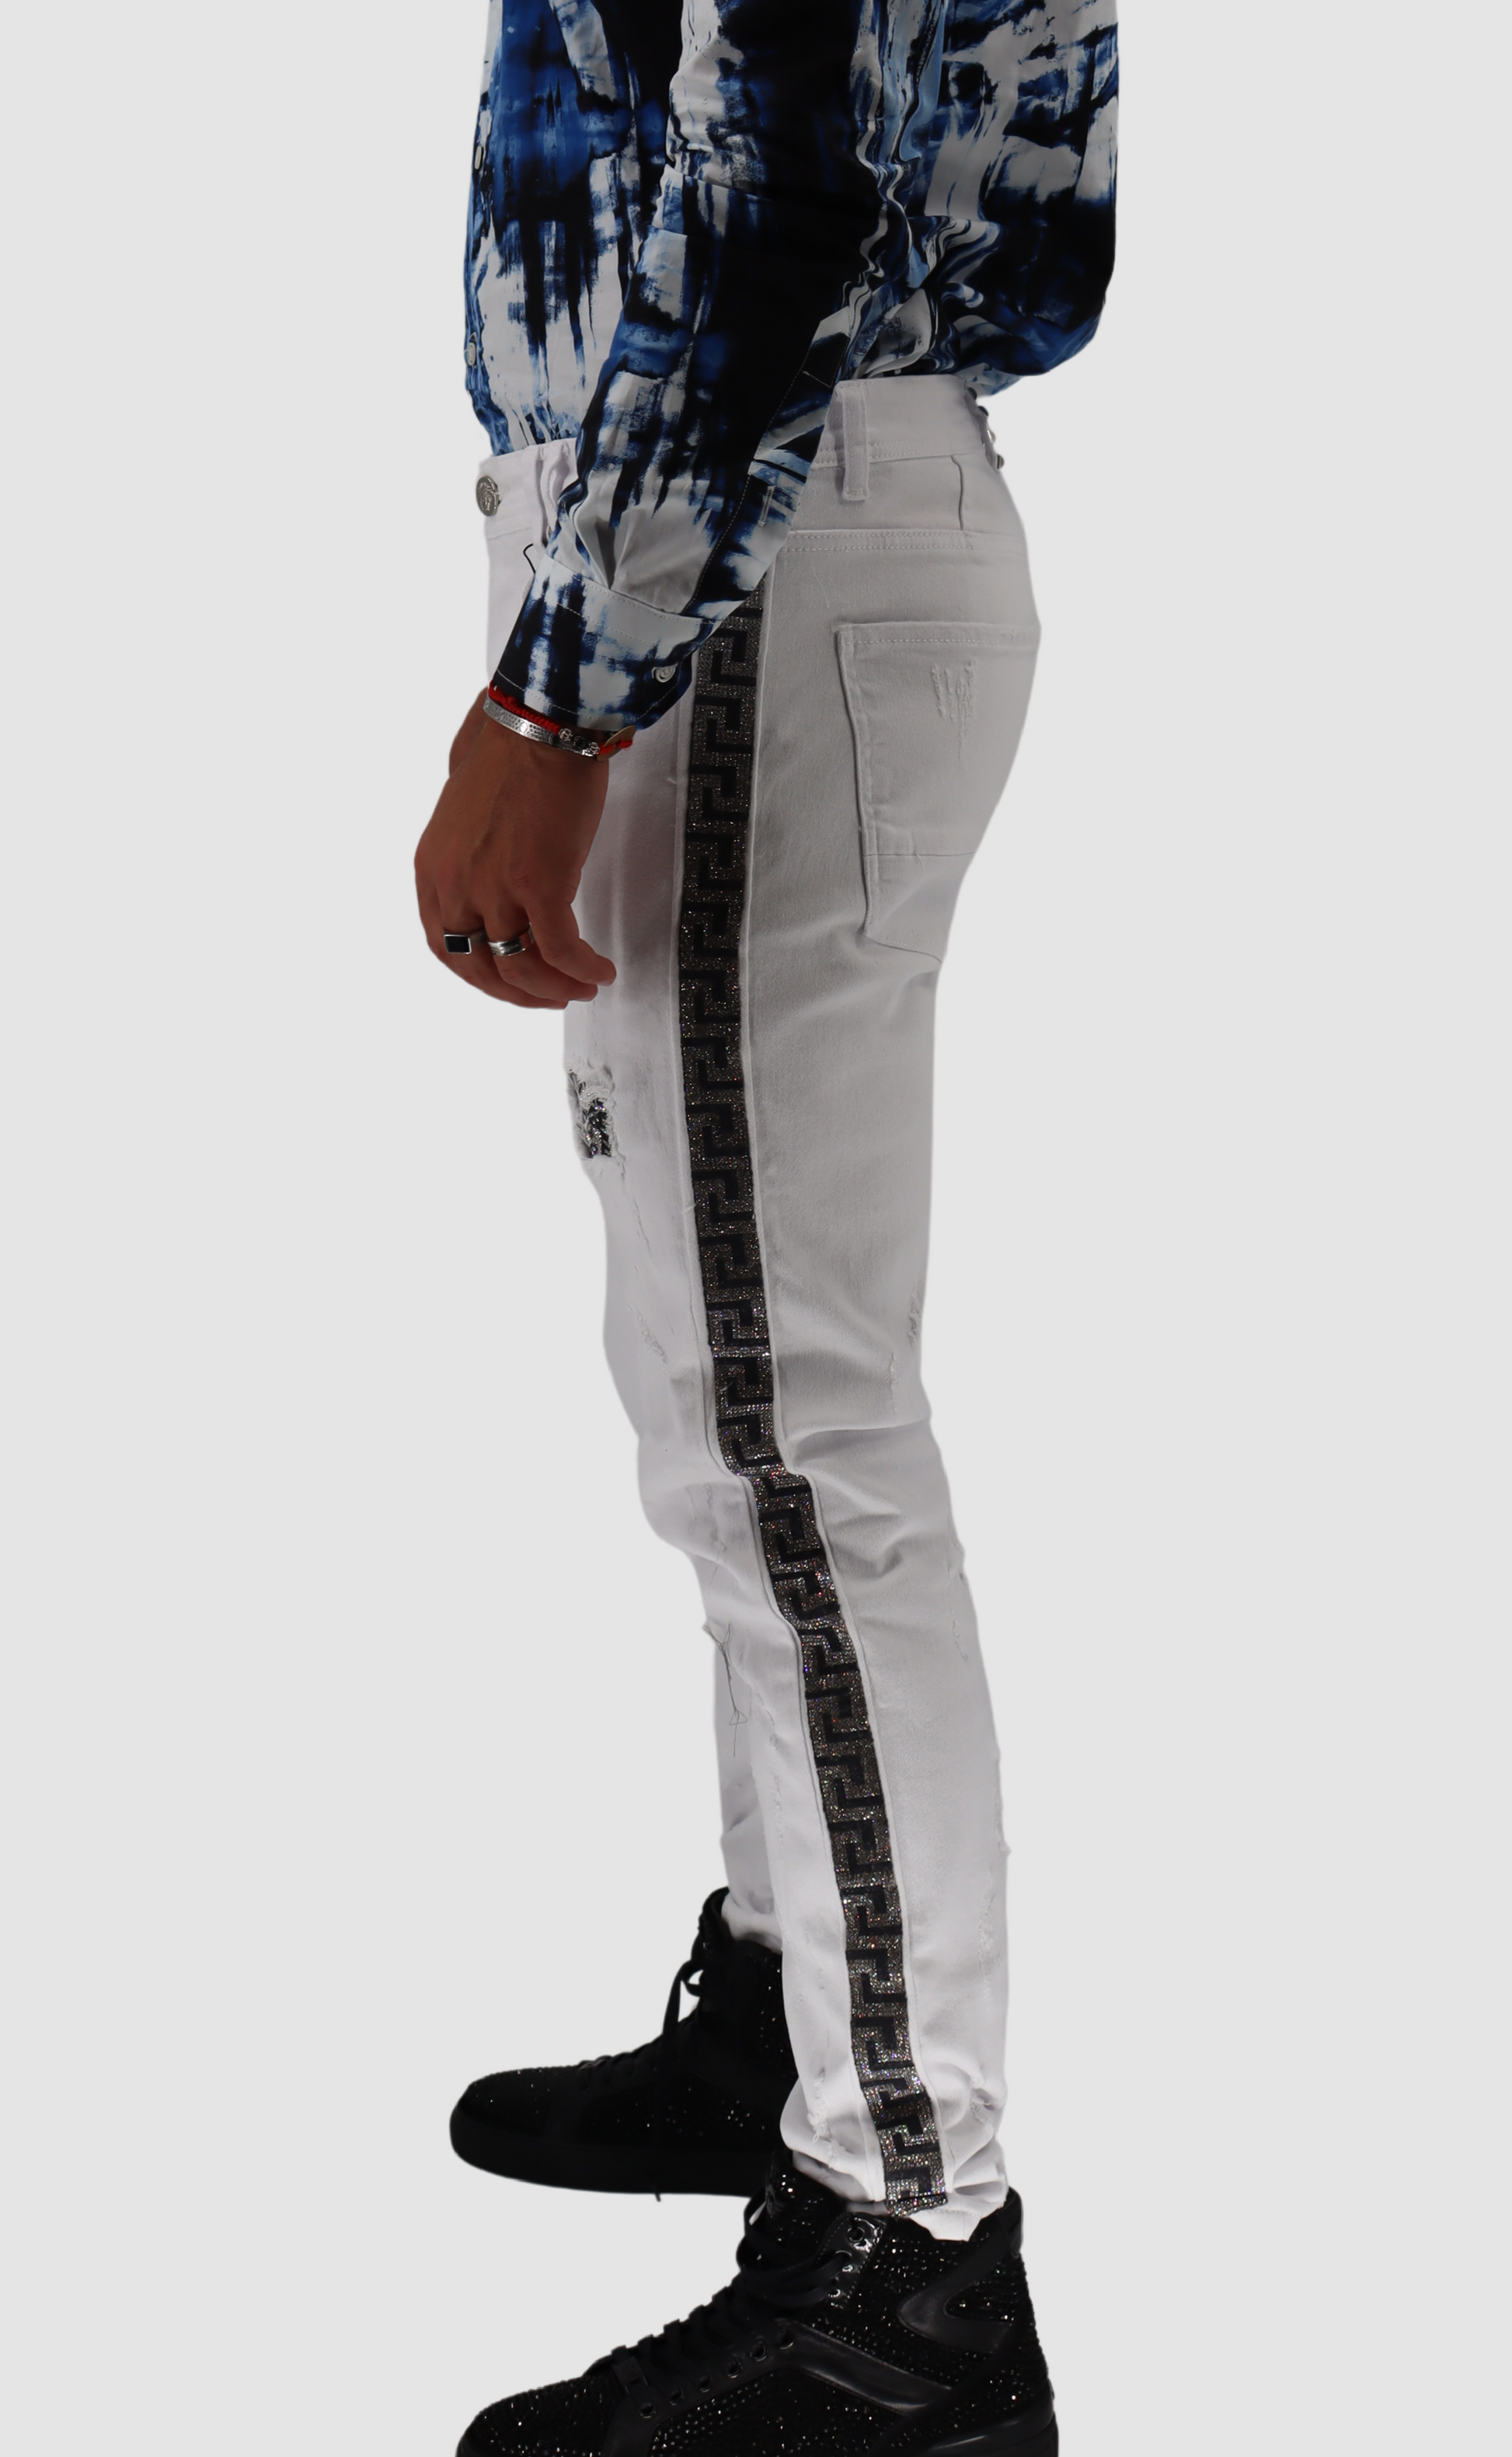 BARABAS White/Silver Jeans